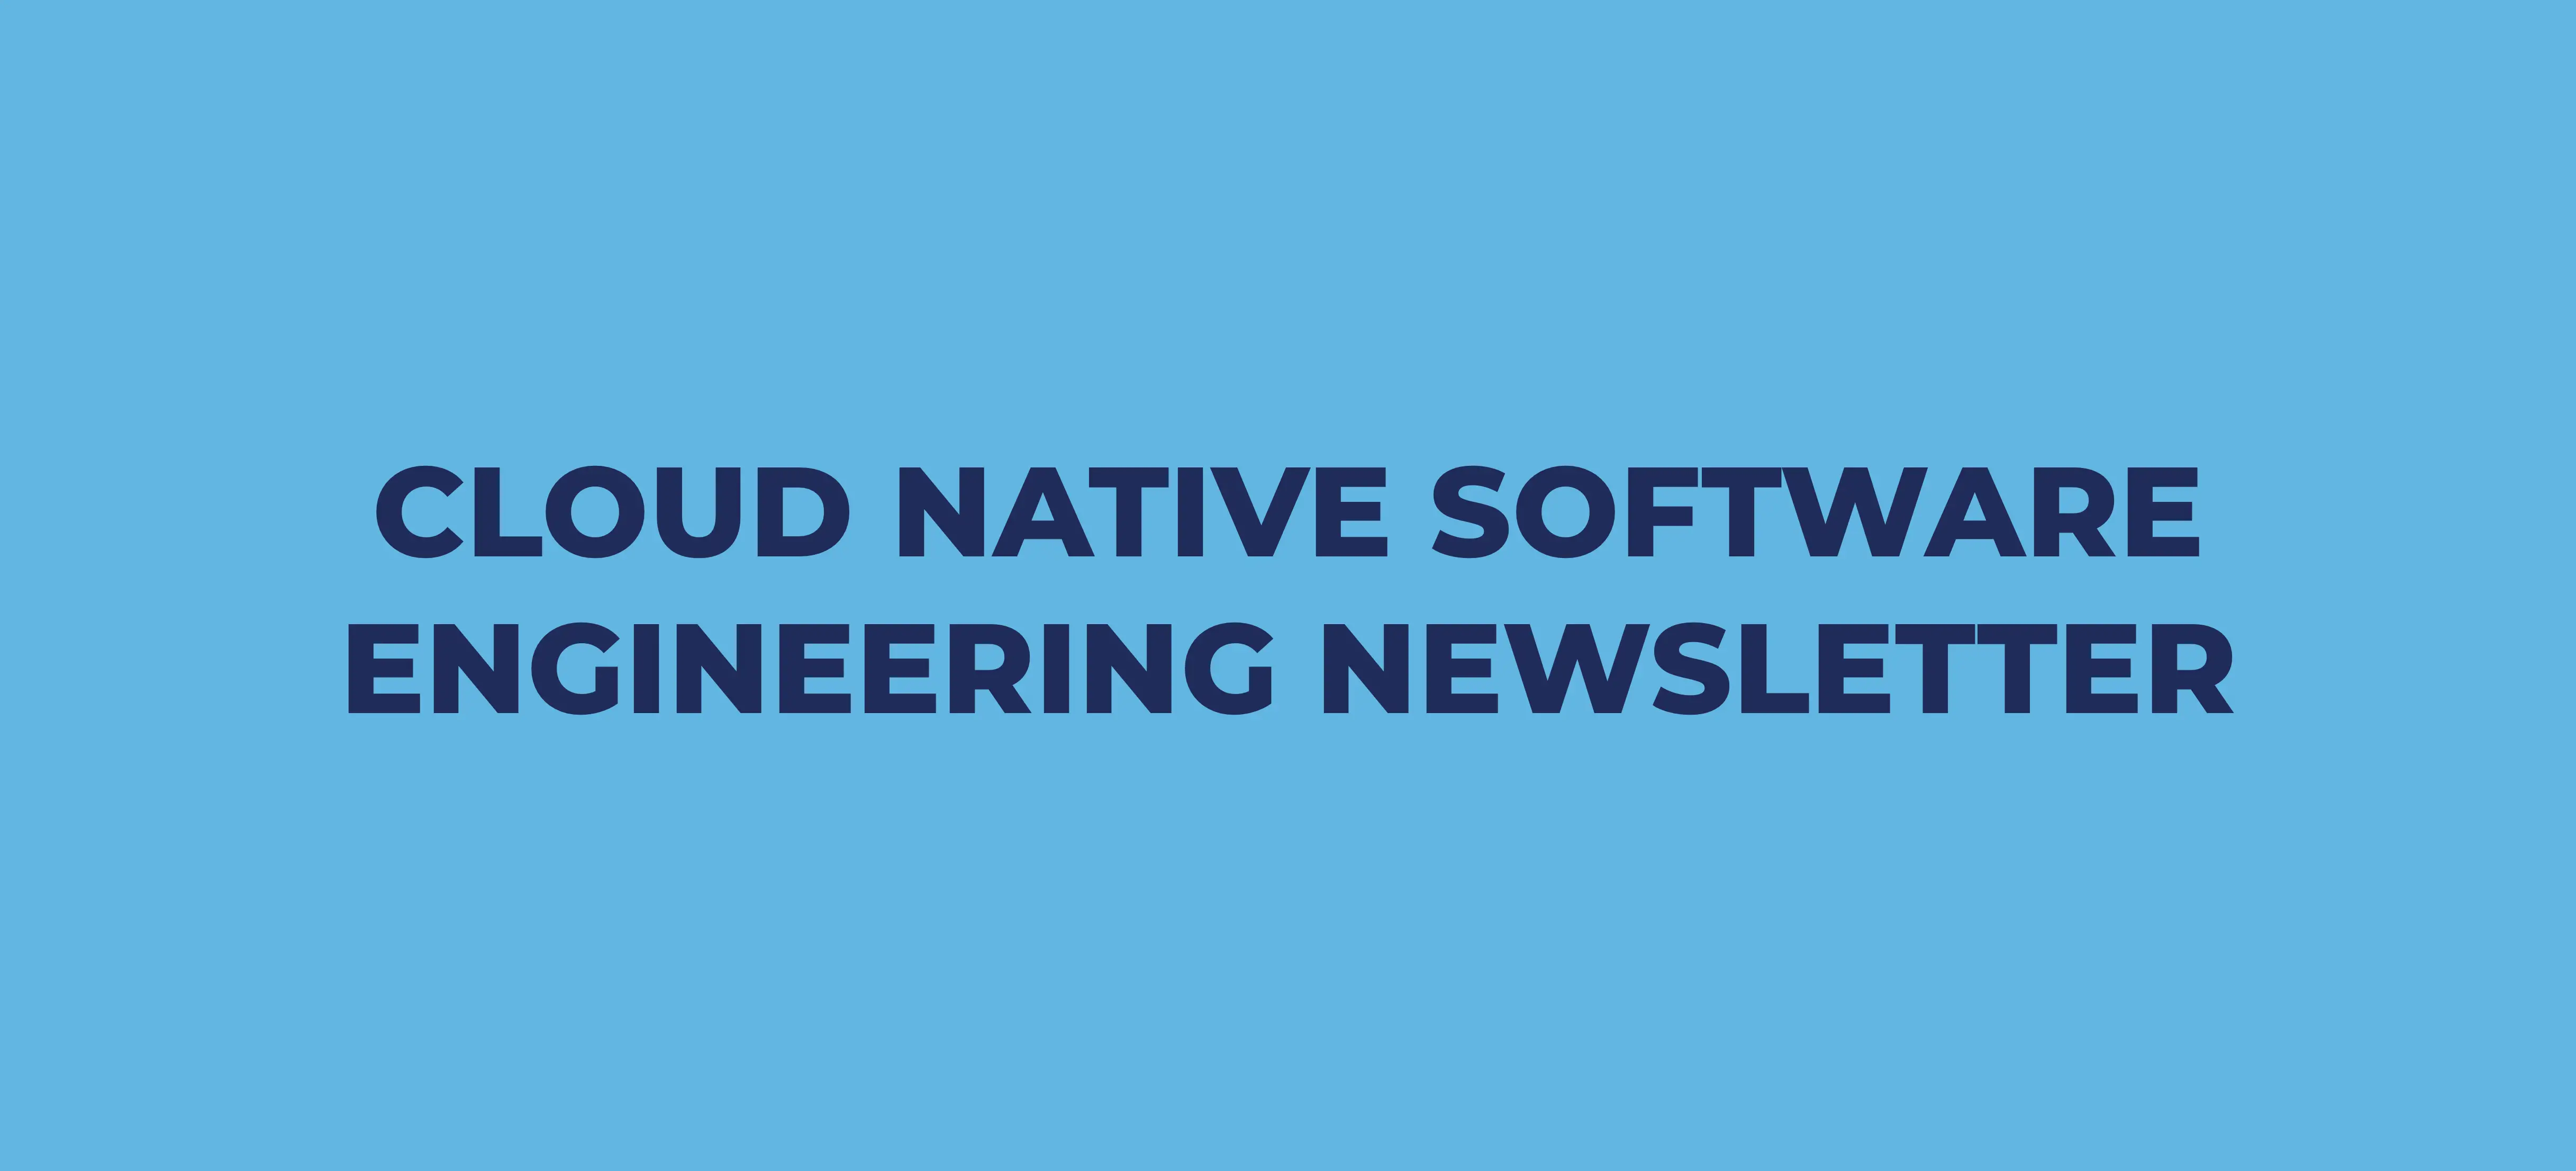 Cloud Native Software Engineering Newsletter Banner